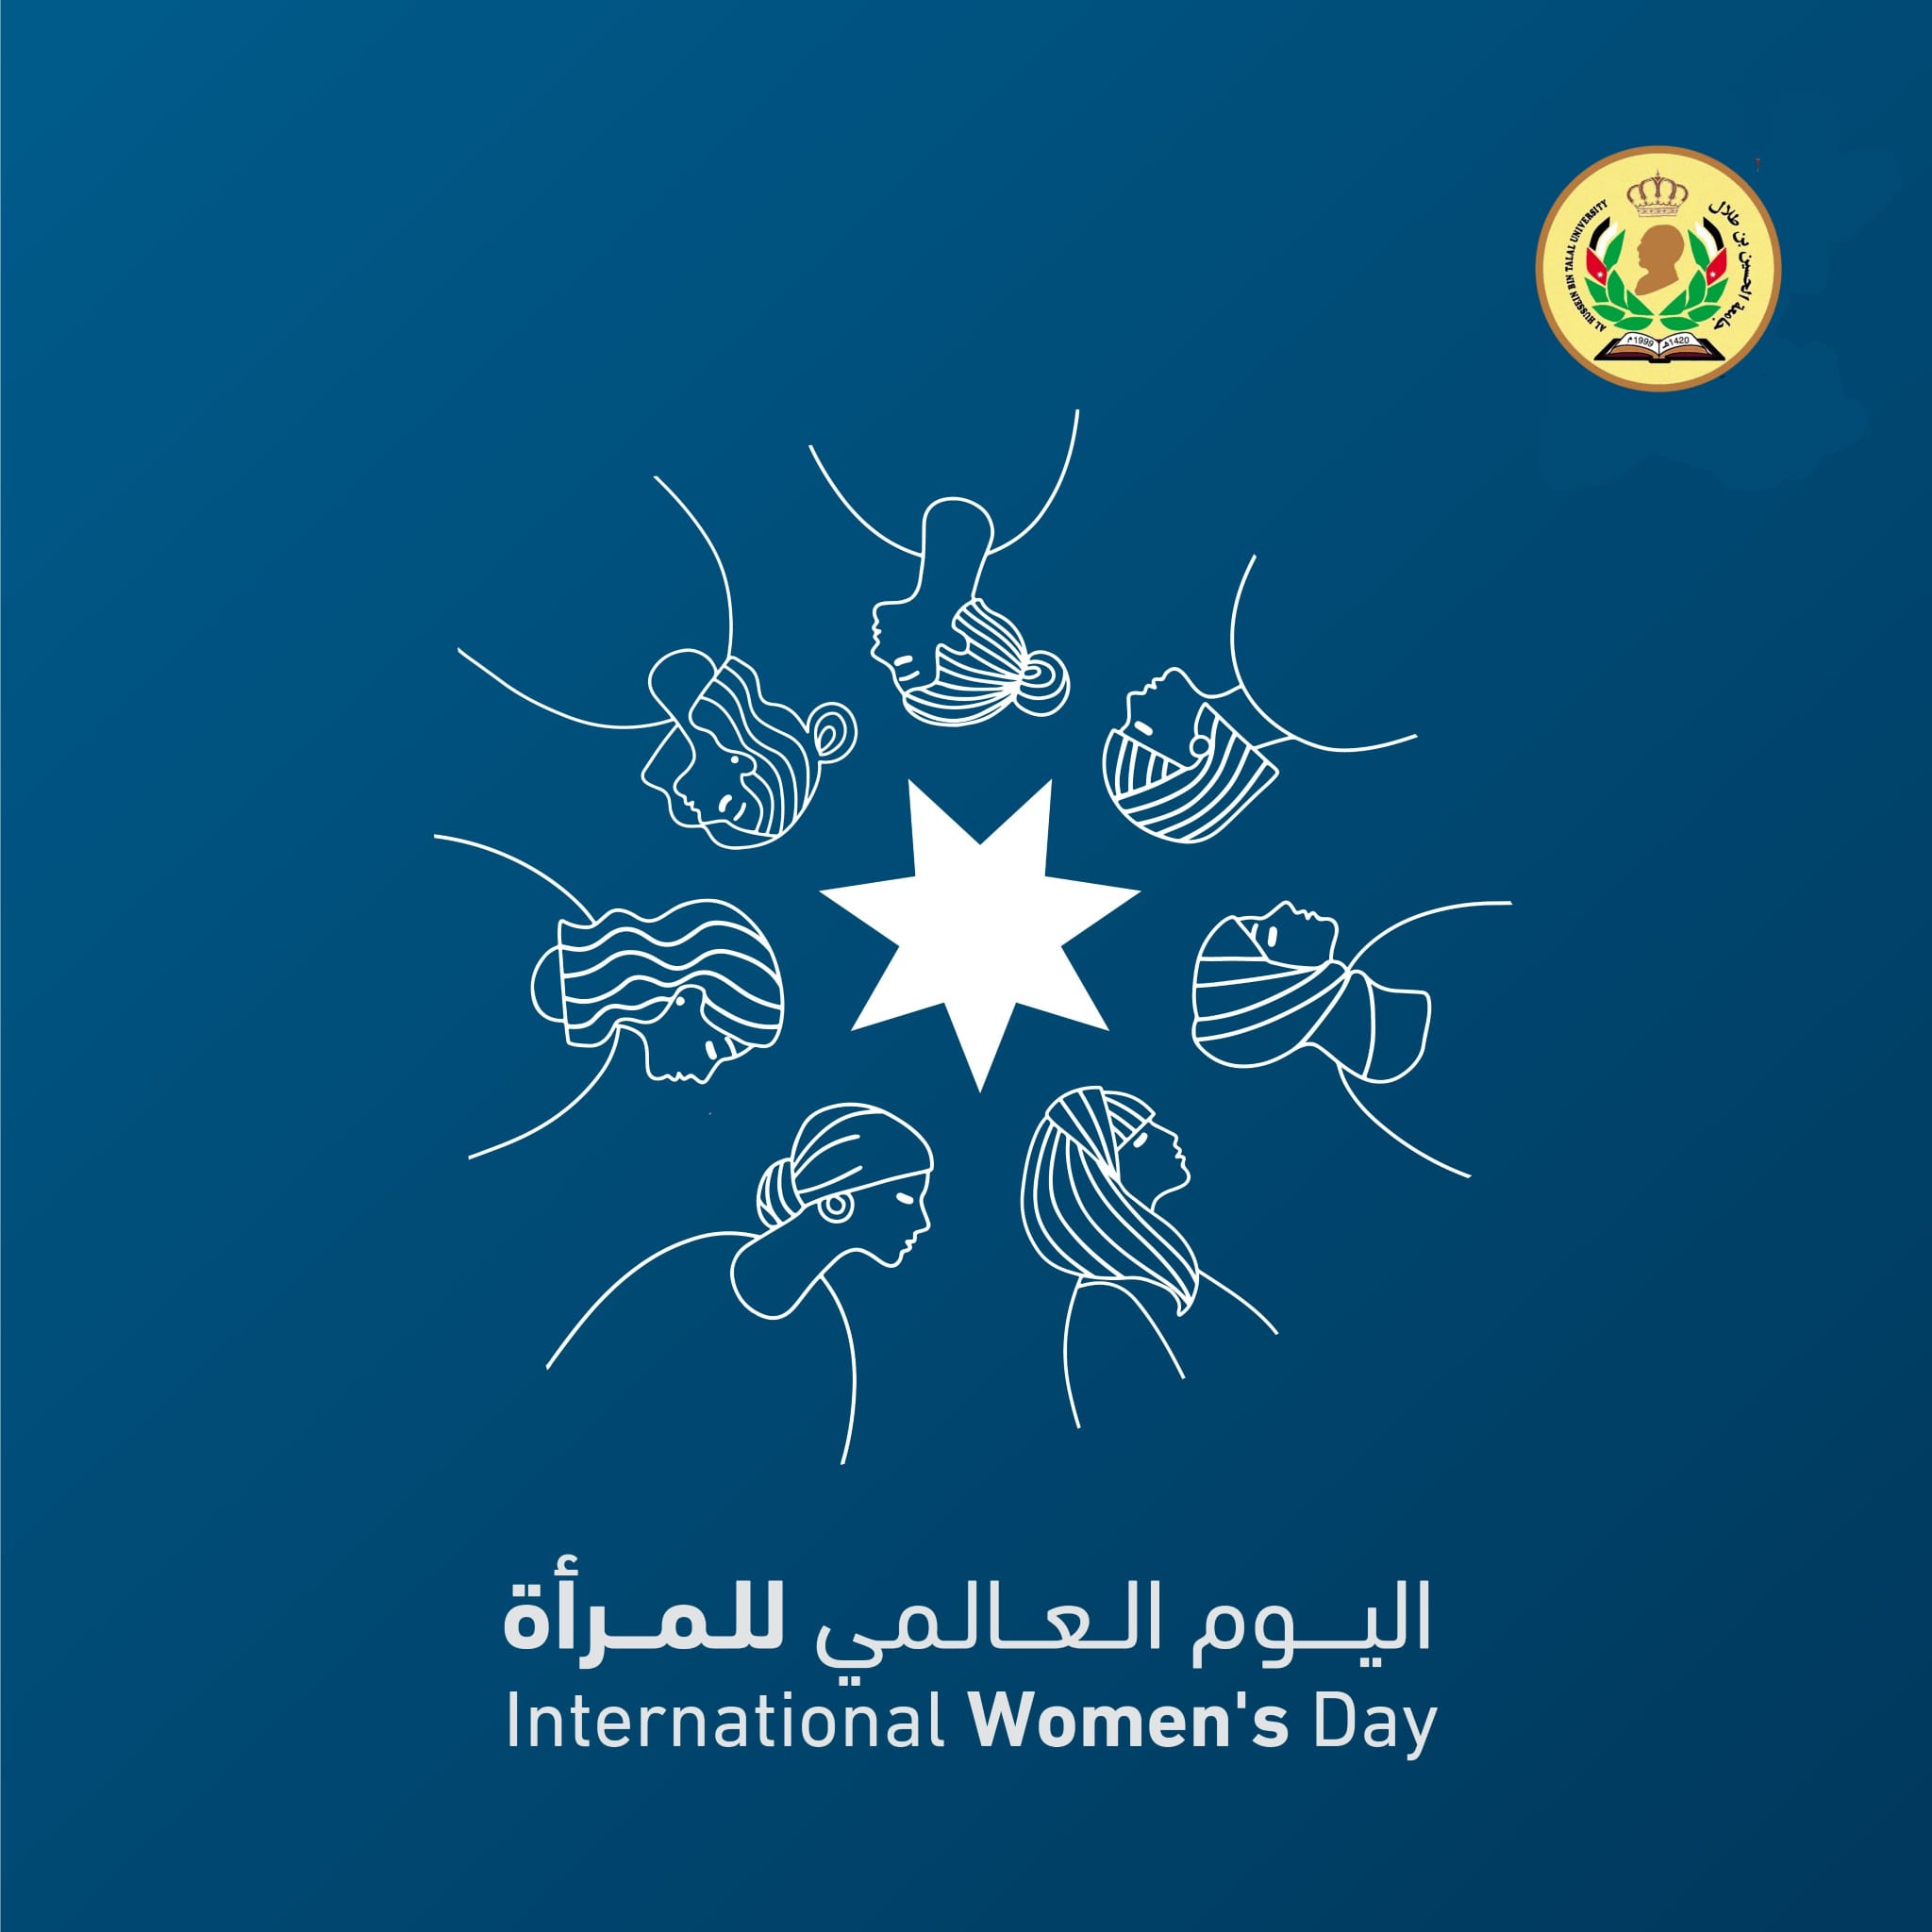 The President of Al Hussein Bin Talal University congratulates Jordanian women on the occasion of International Women’s Day